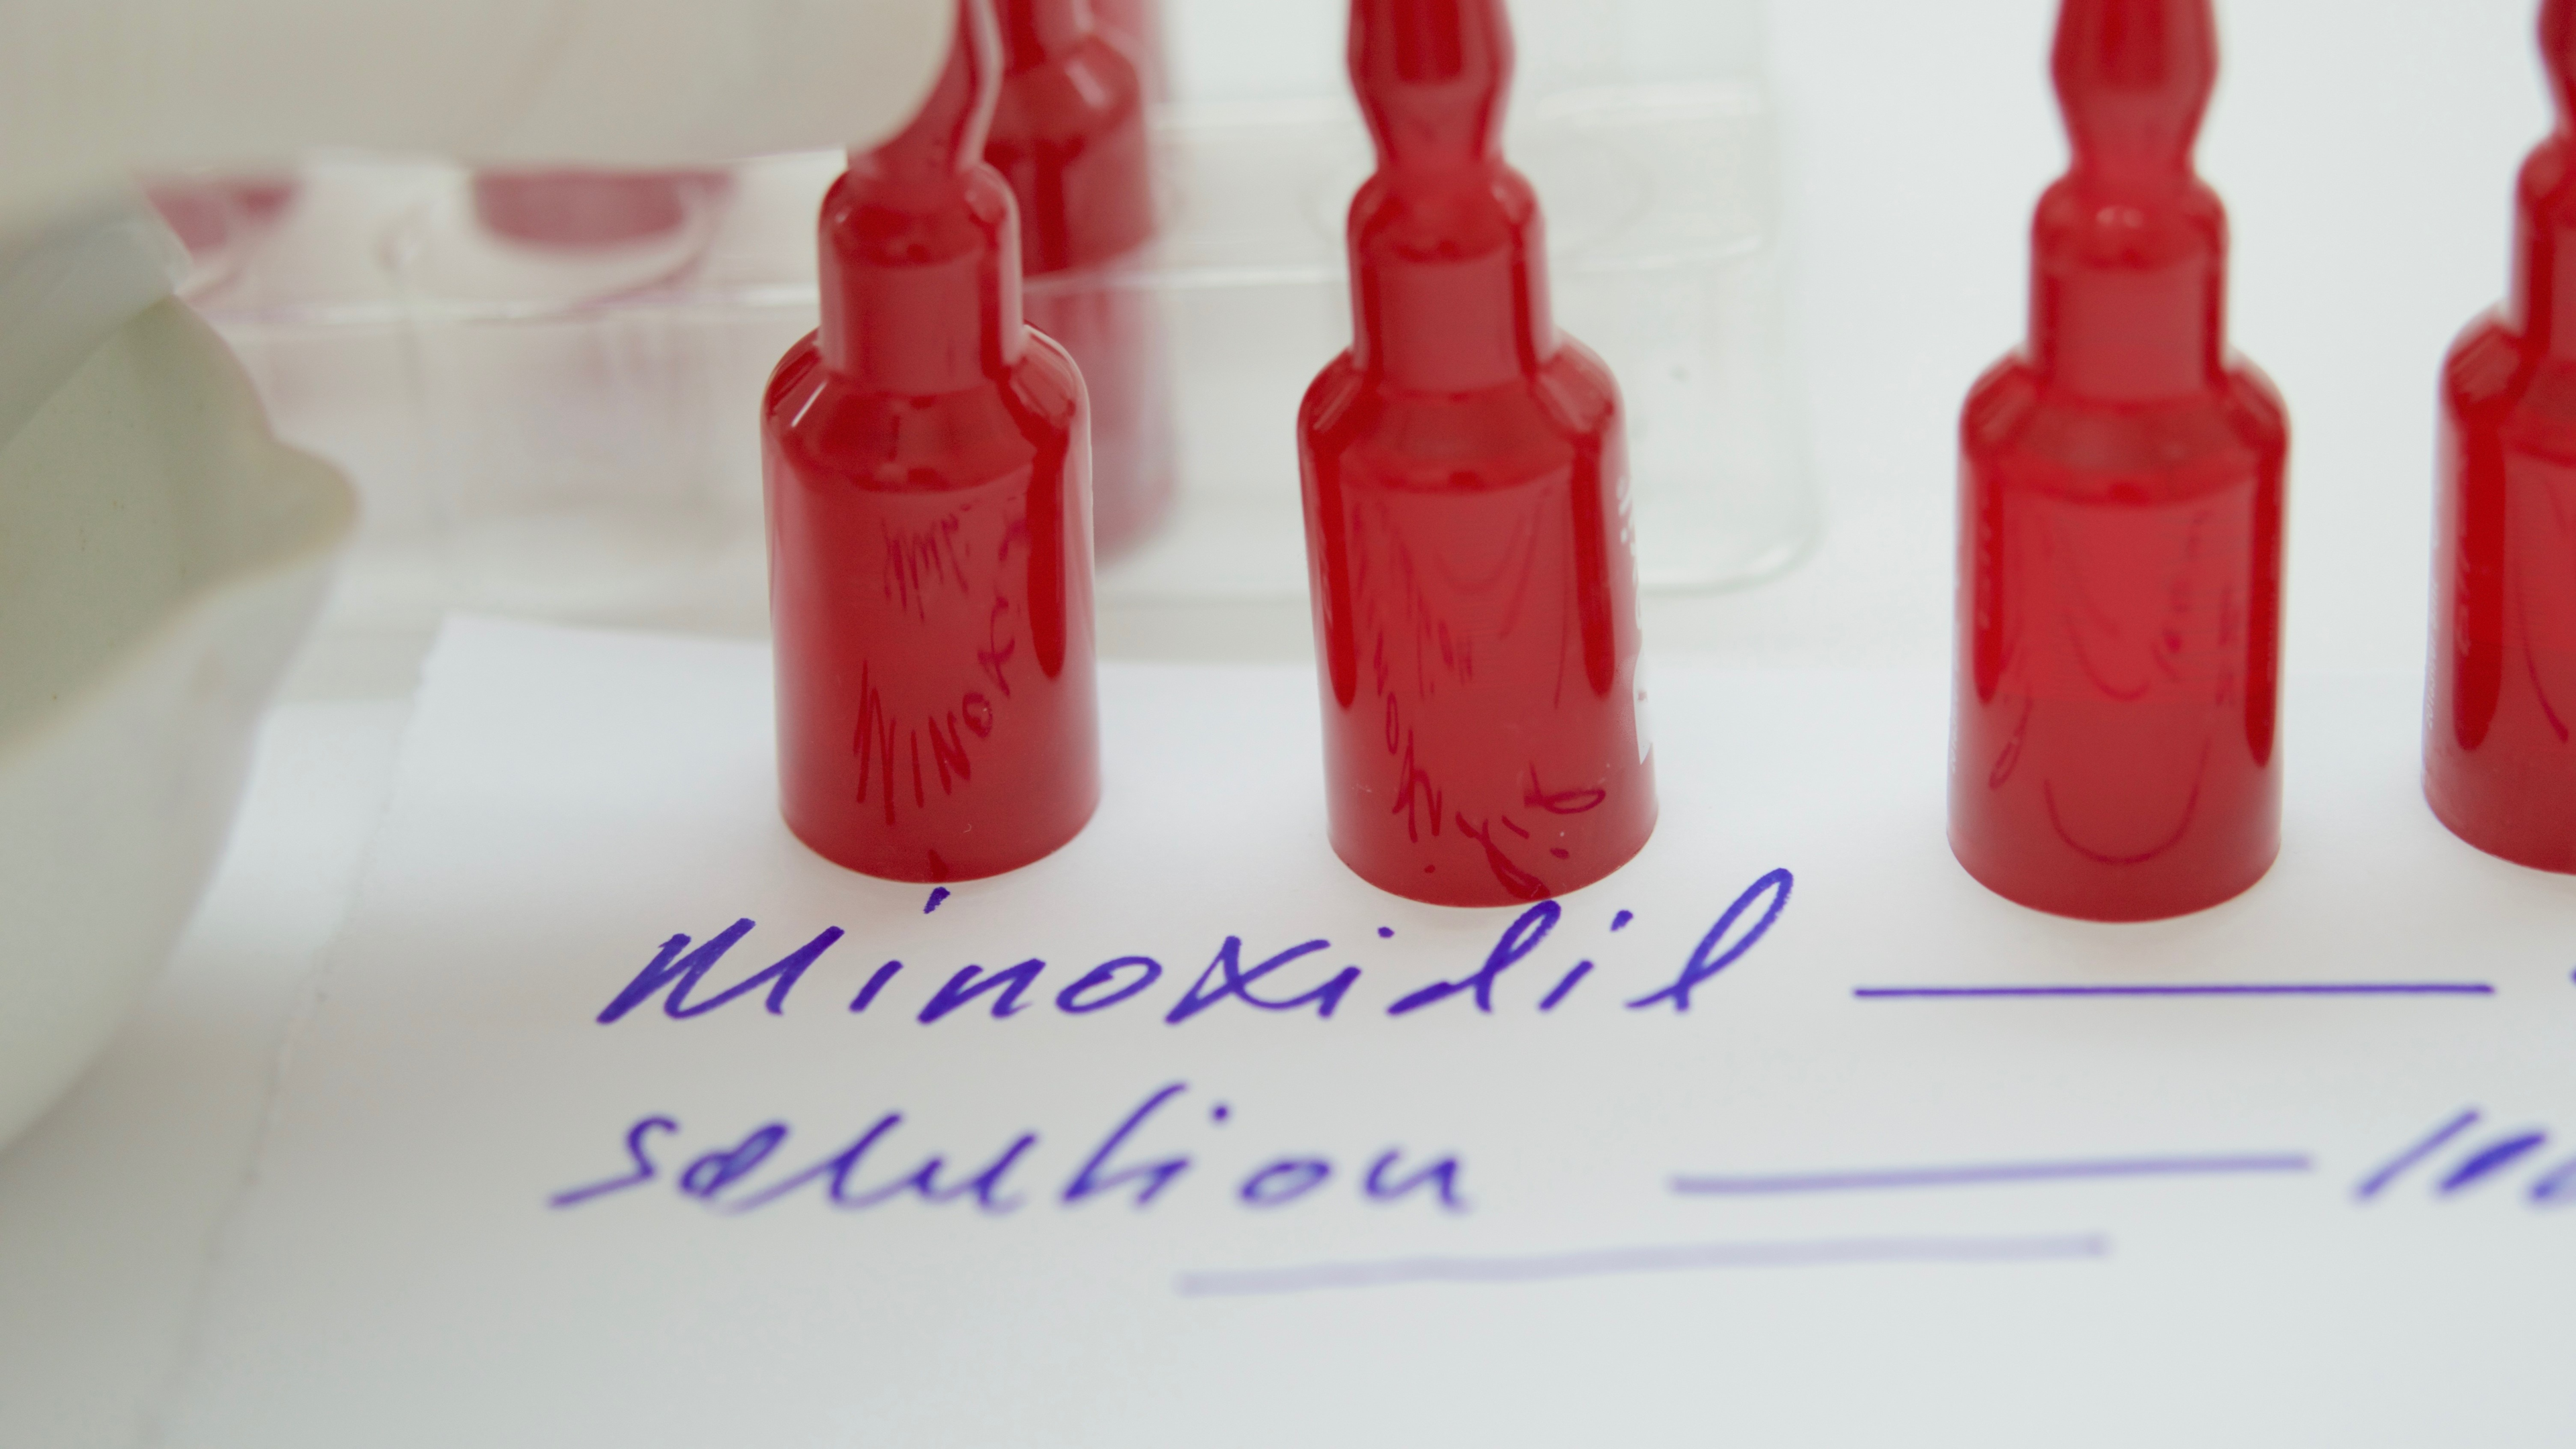 minoxidil for women as an alternative to hair transplant procedures